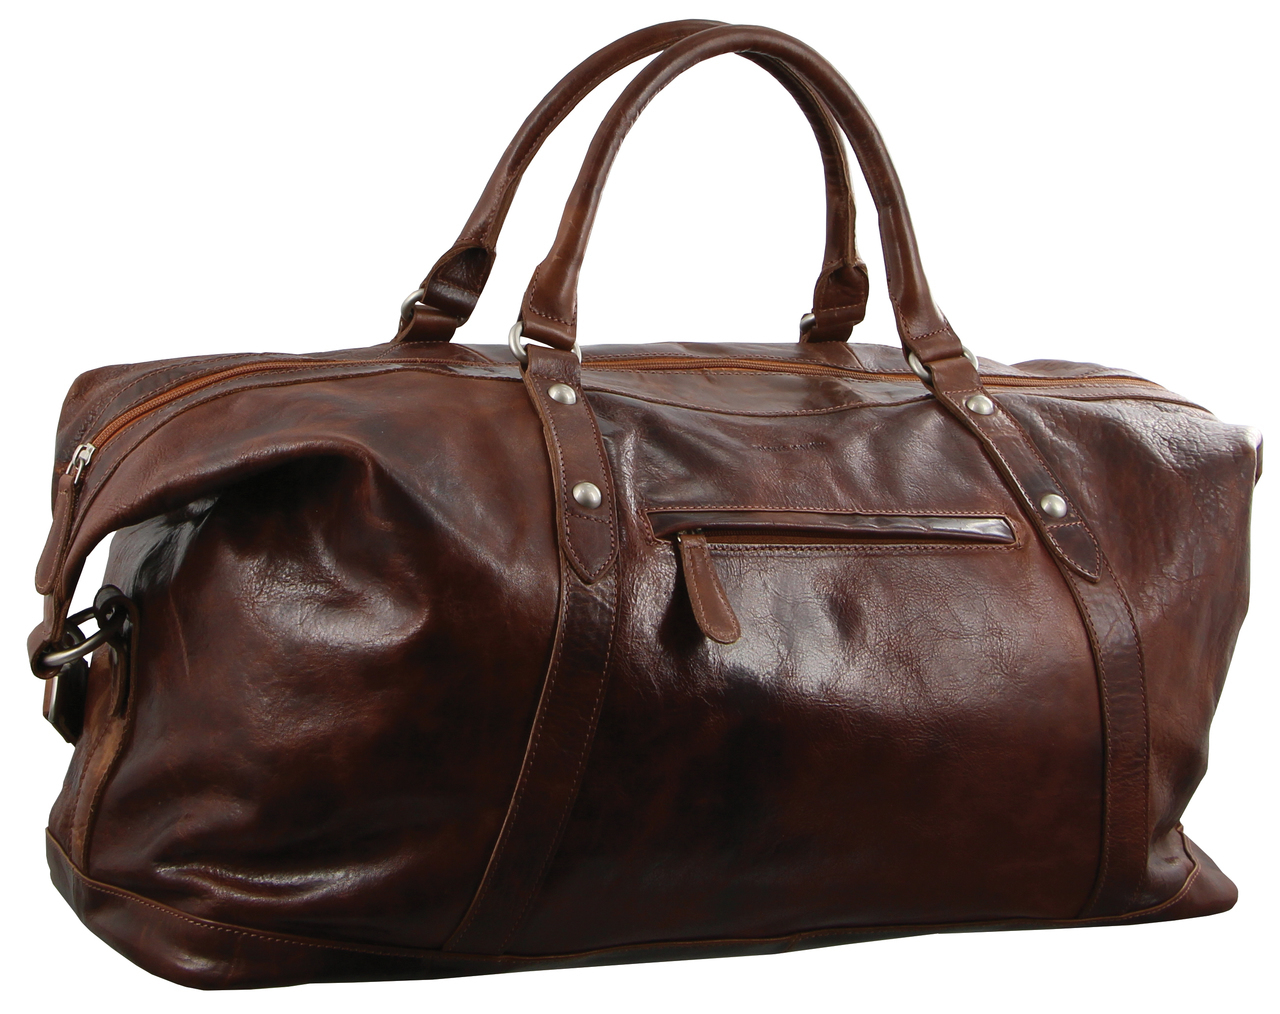 Pierre,Cardin Rustic Leather Travel Business Trip Bag Overnight - Cognac